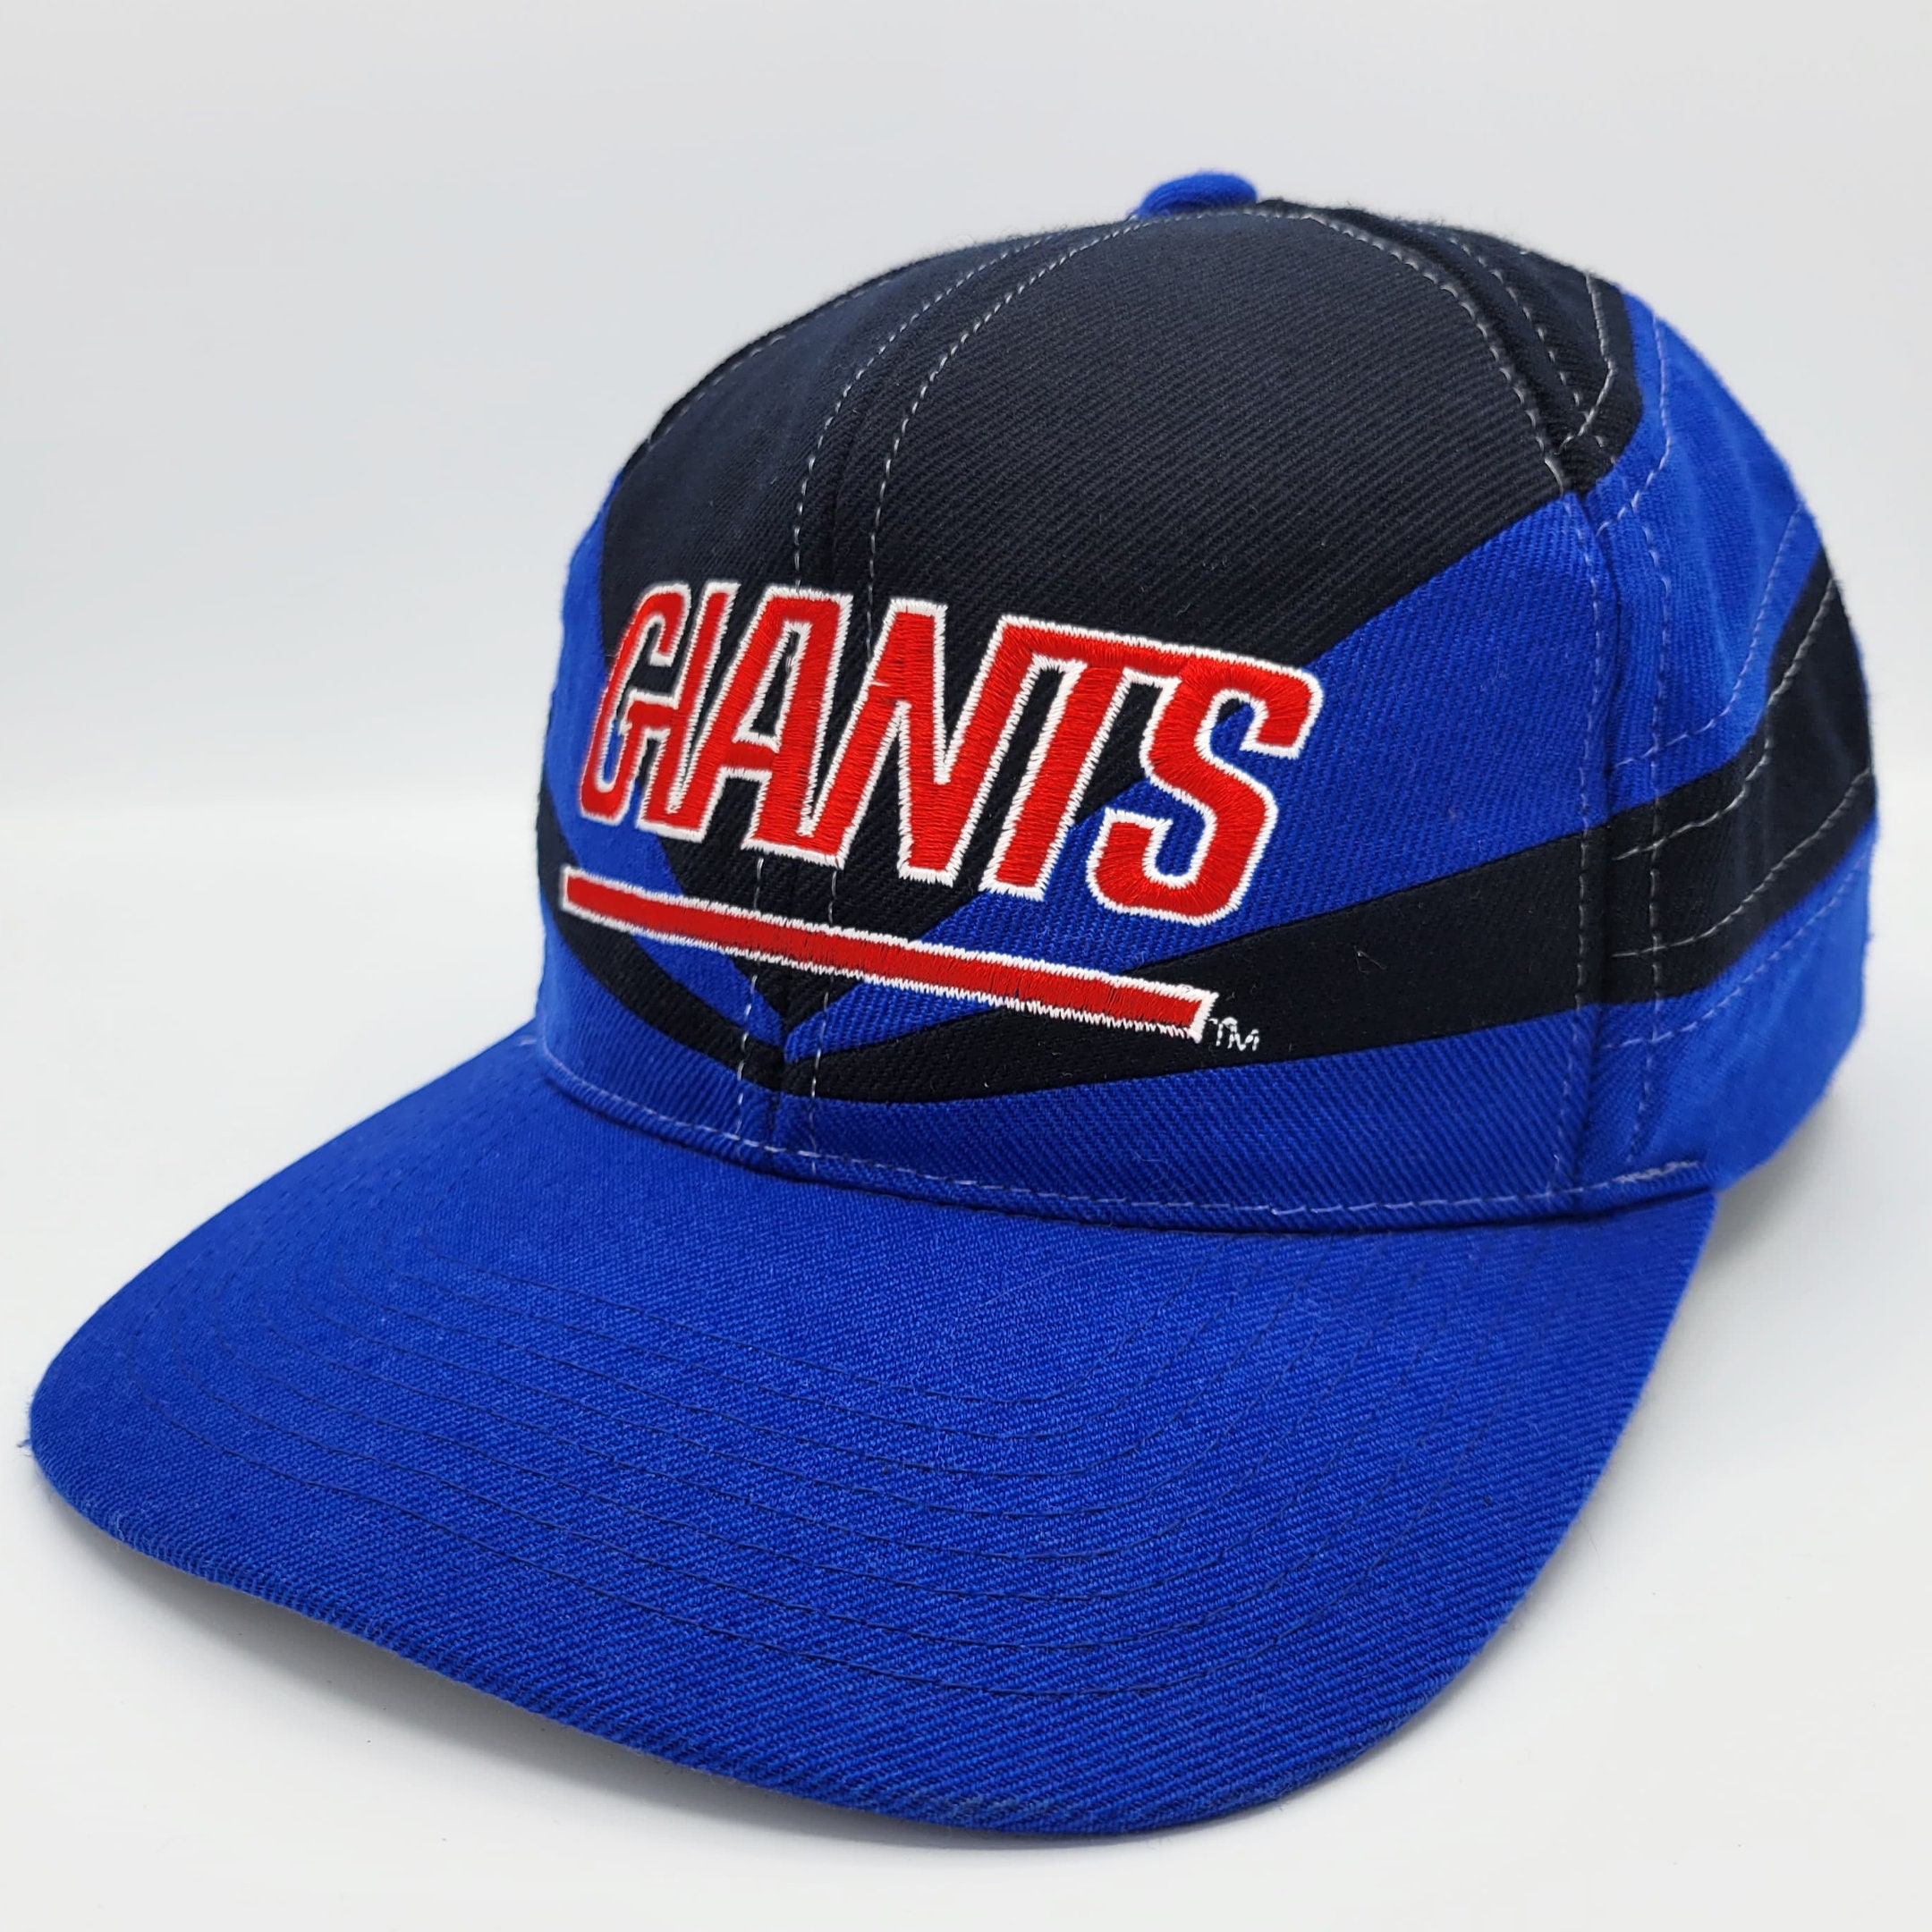 New York Giants Vintage 90s Apex One Snapback Hat NFL Football Blue & Black  Baseball Style Cap Wool Blend FREE SHIPPING 